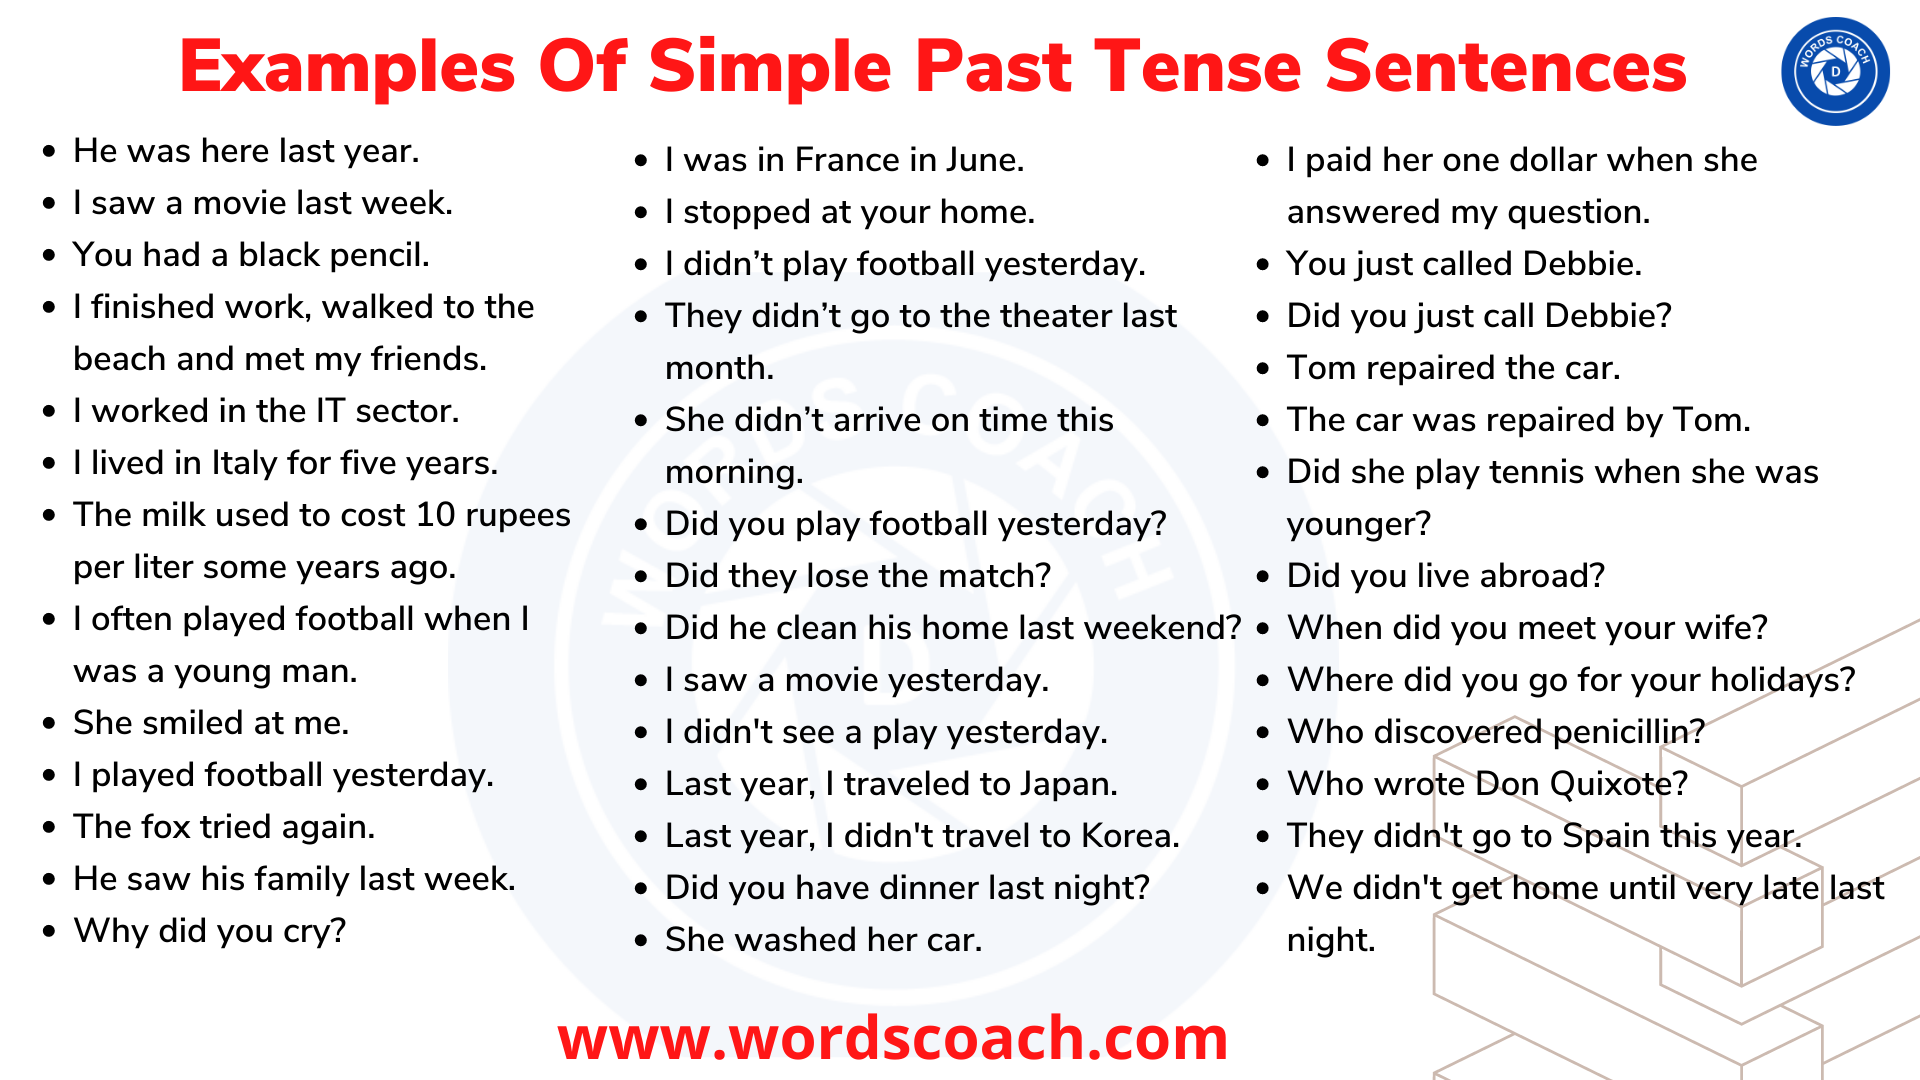 Examples Of Simple Past Tense Sentences - wordscoach.com